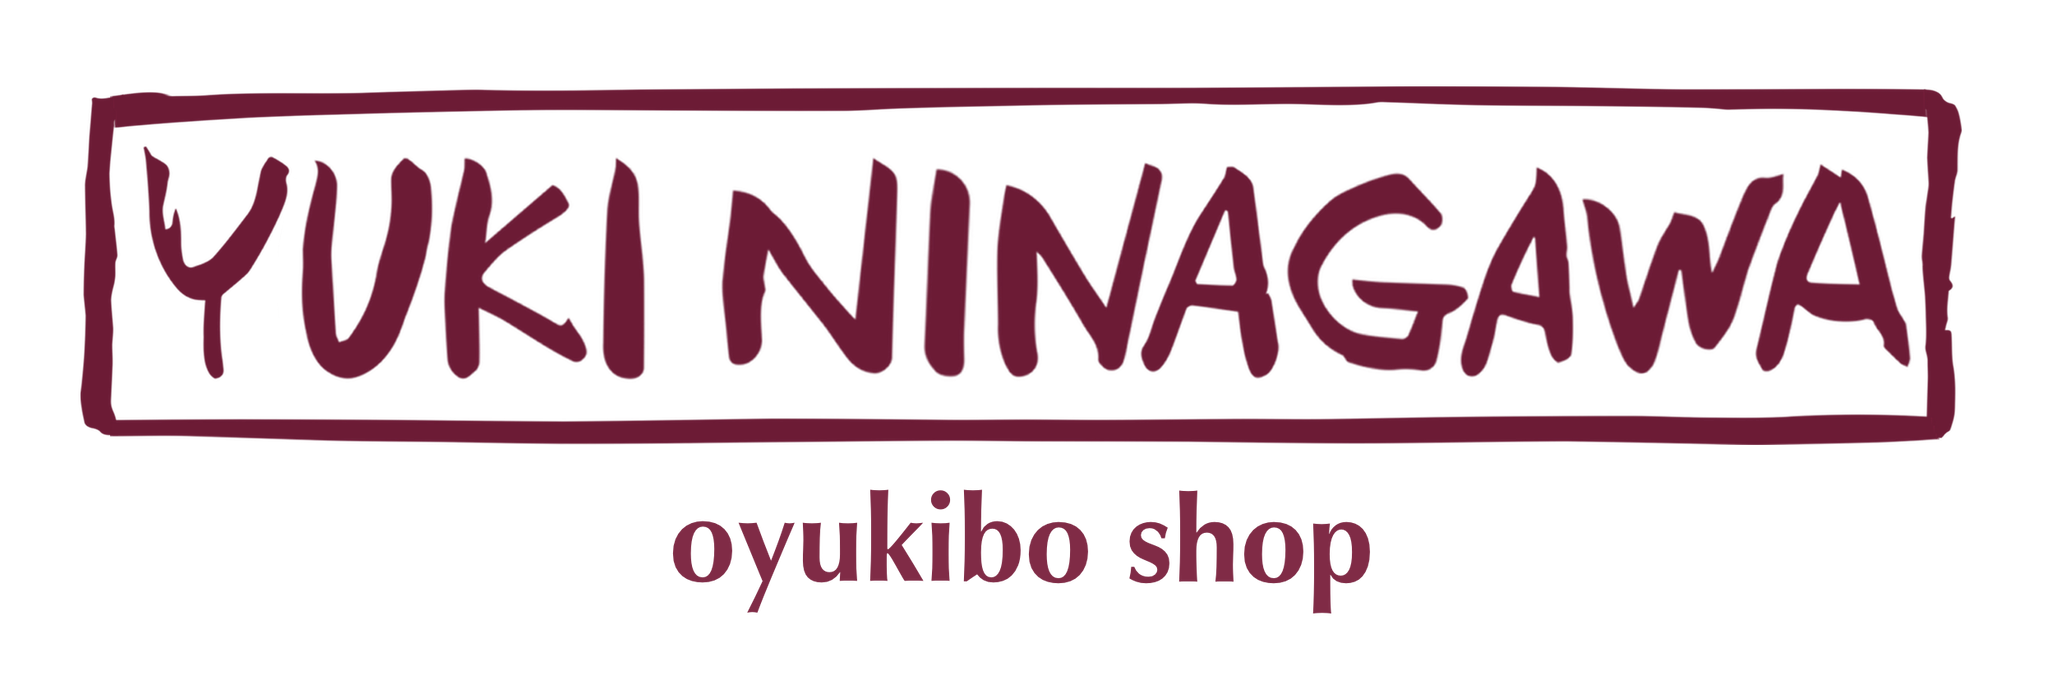 yuki ninagawa  - oyukibo shop -